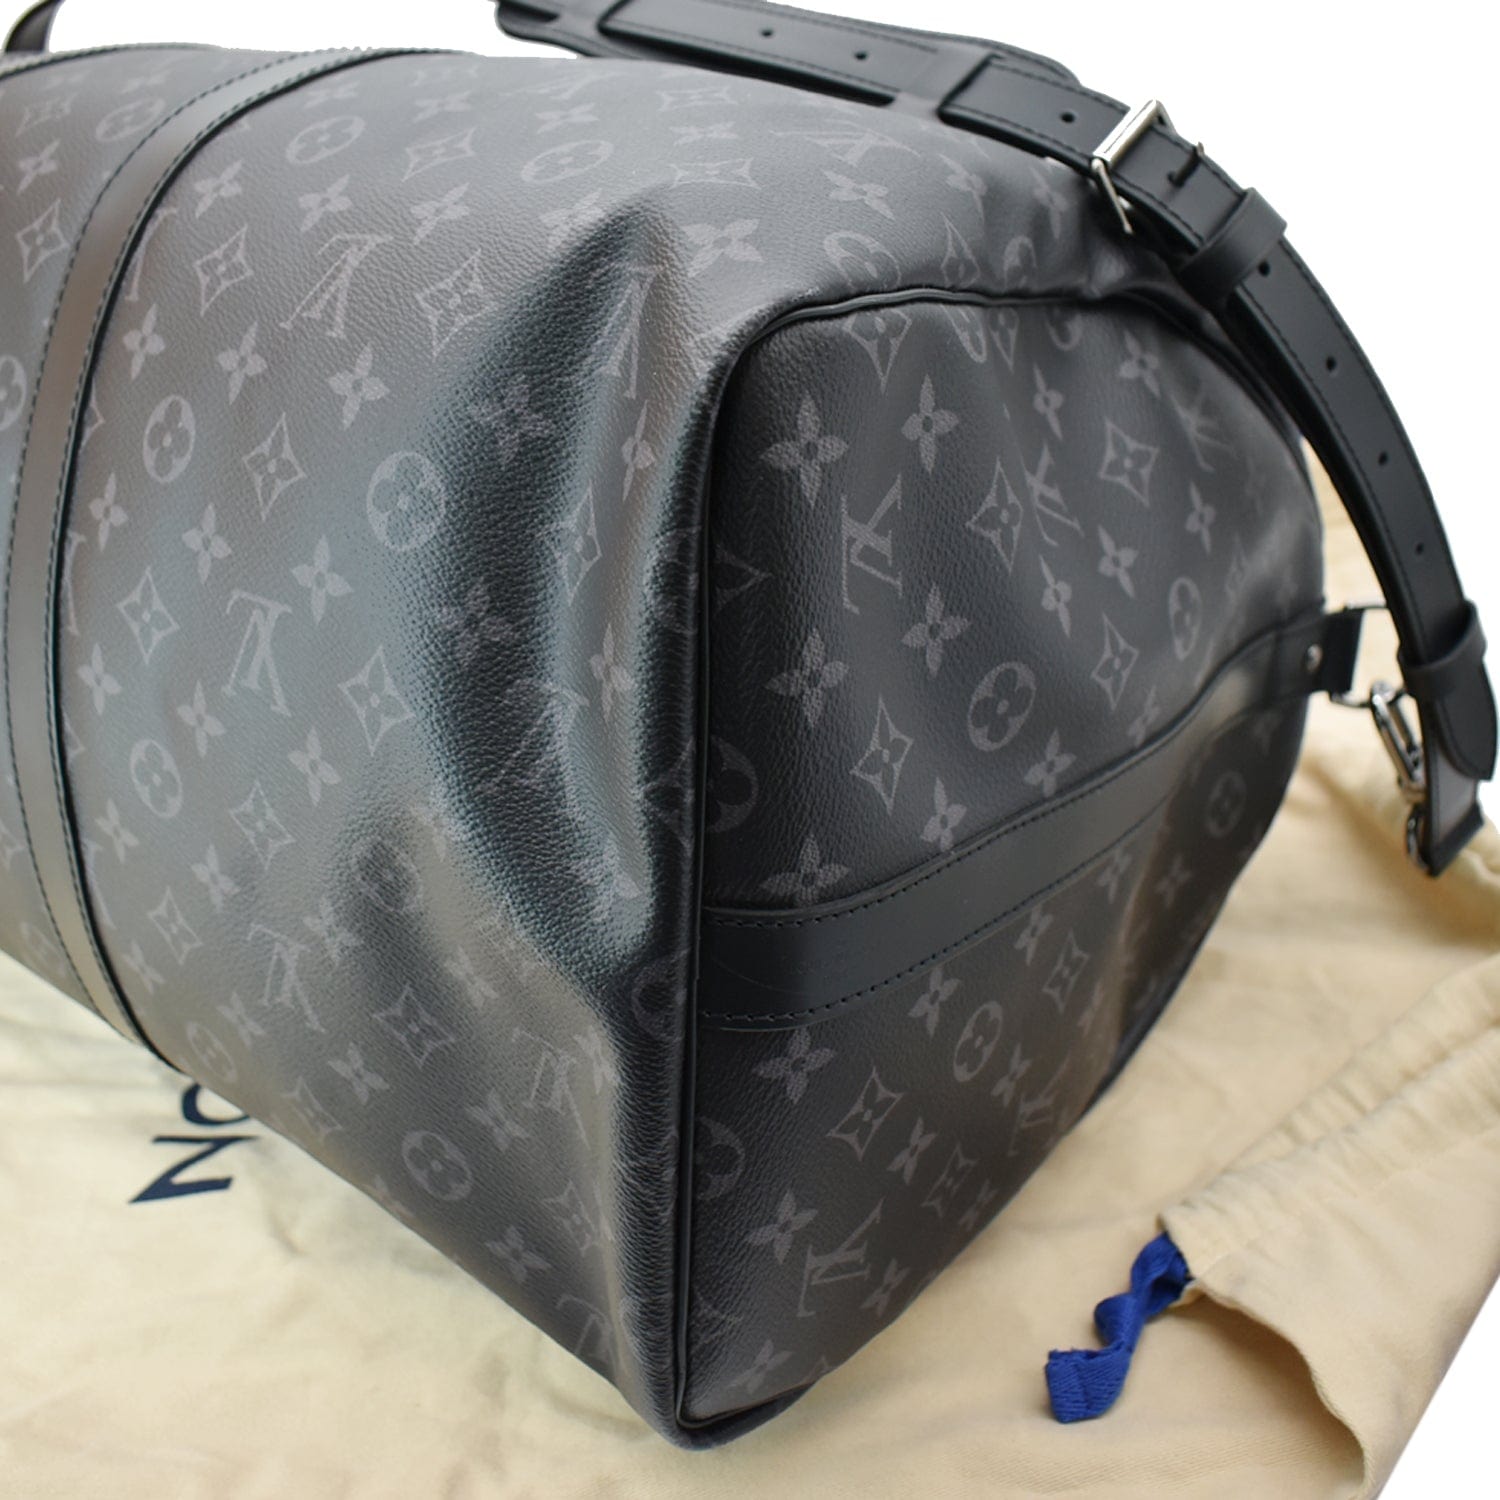 Louis Vuitton Keepall 55 Travel Duffle Bag Monogram Black